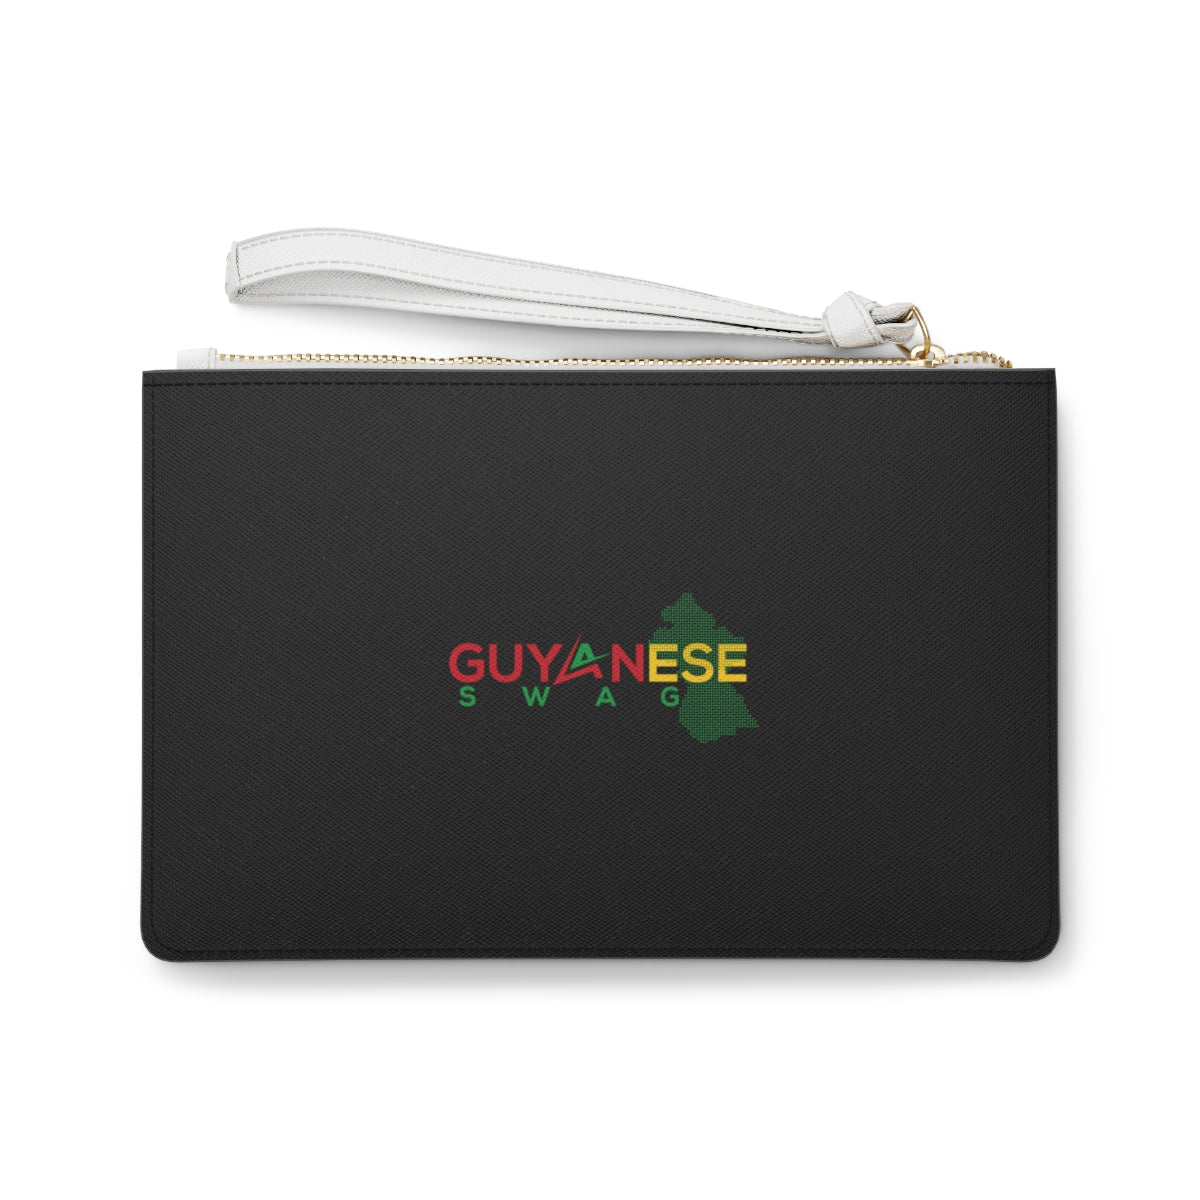 Guyanese Swag Clutch Bag